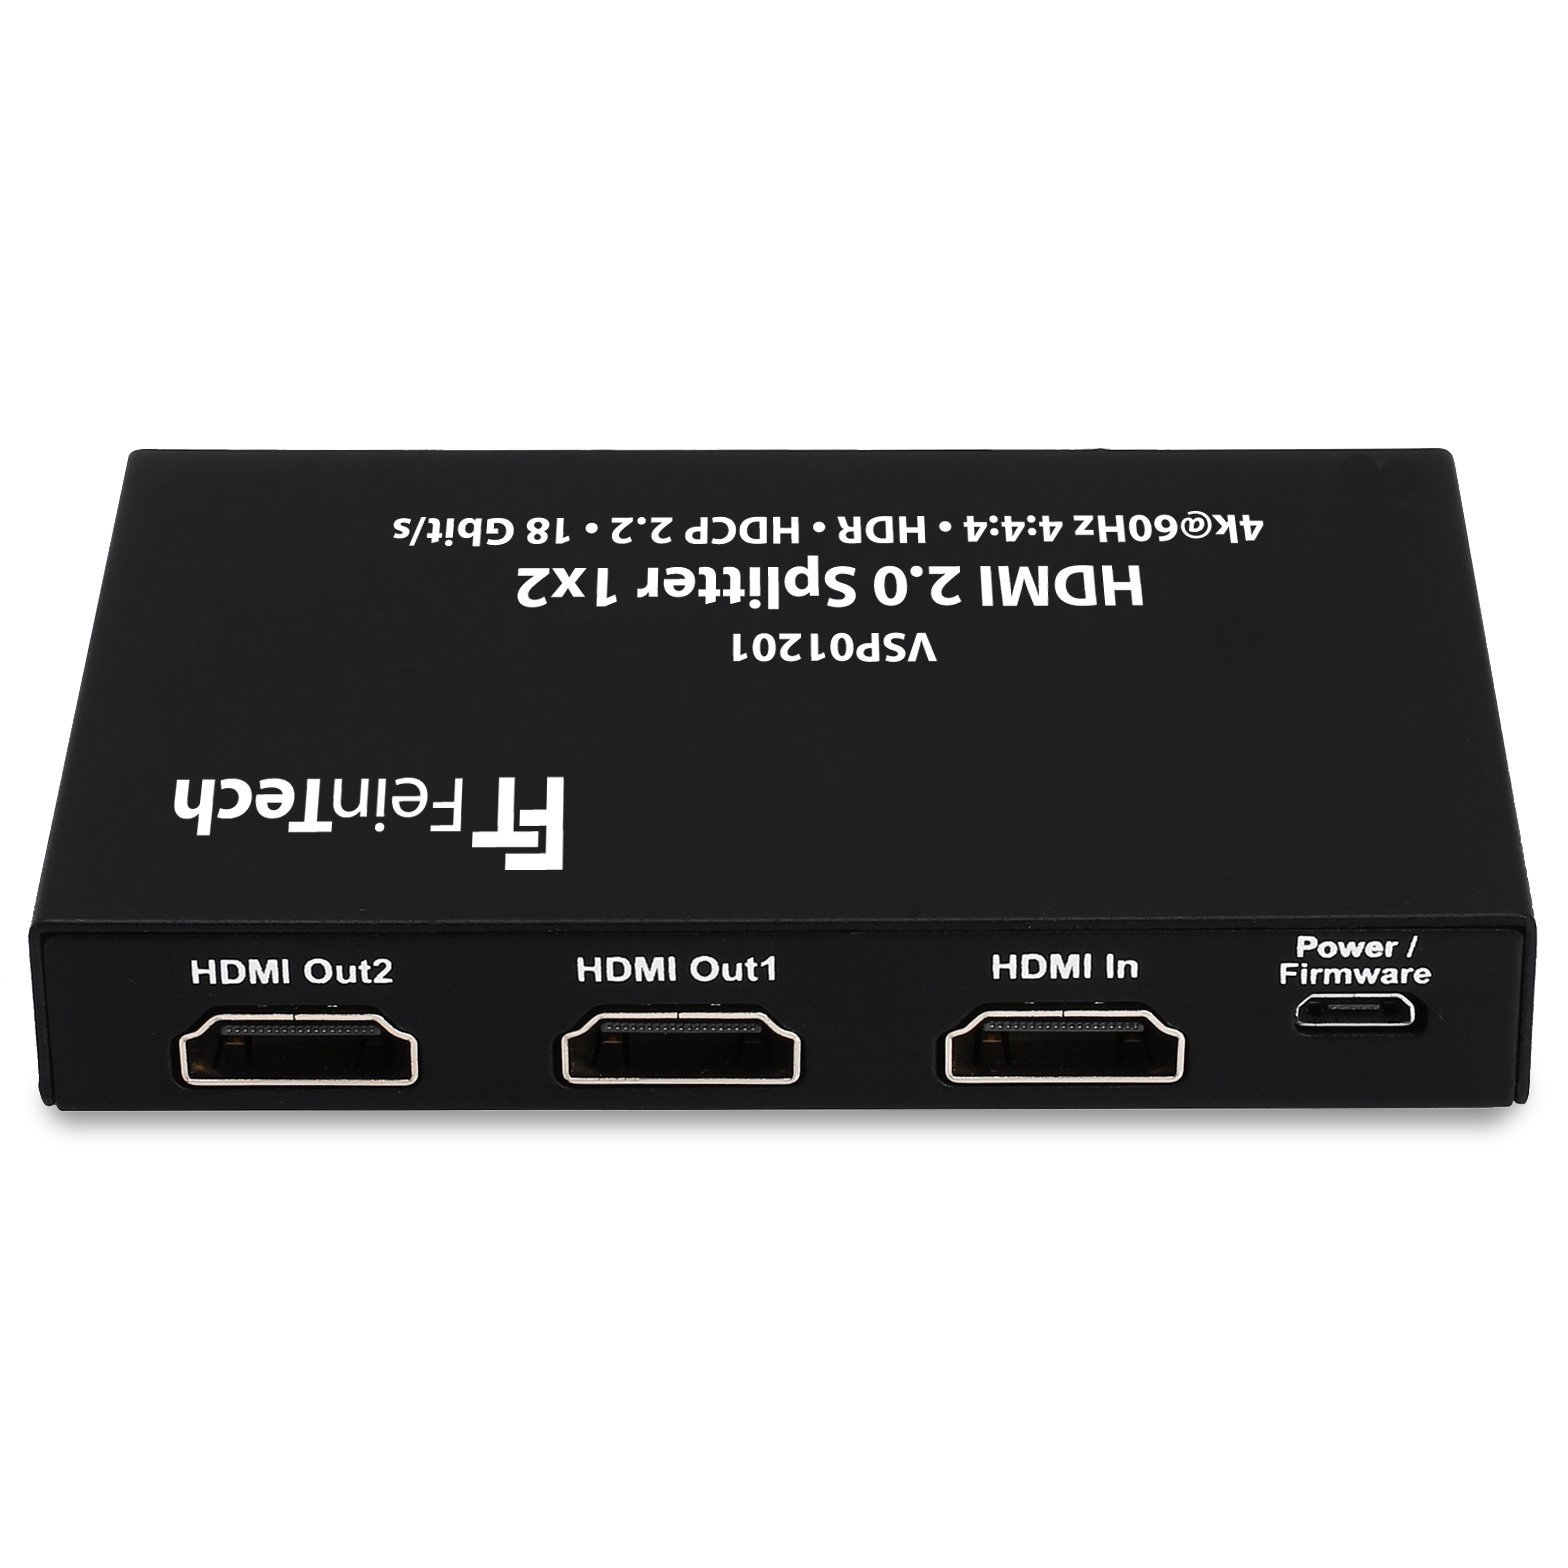 In 2 Splitter HDMI VSP01201 Out 2.0 1 60Hz FEINTECH 4K